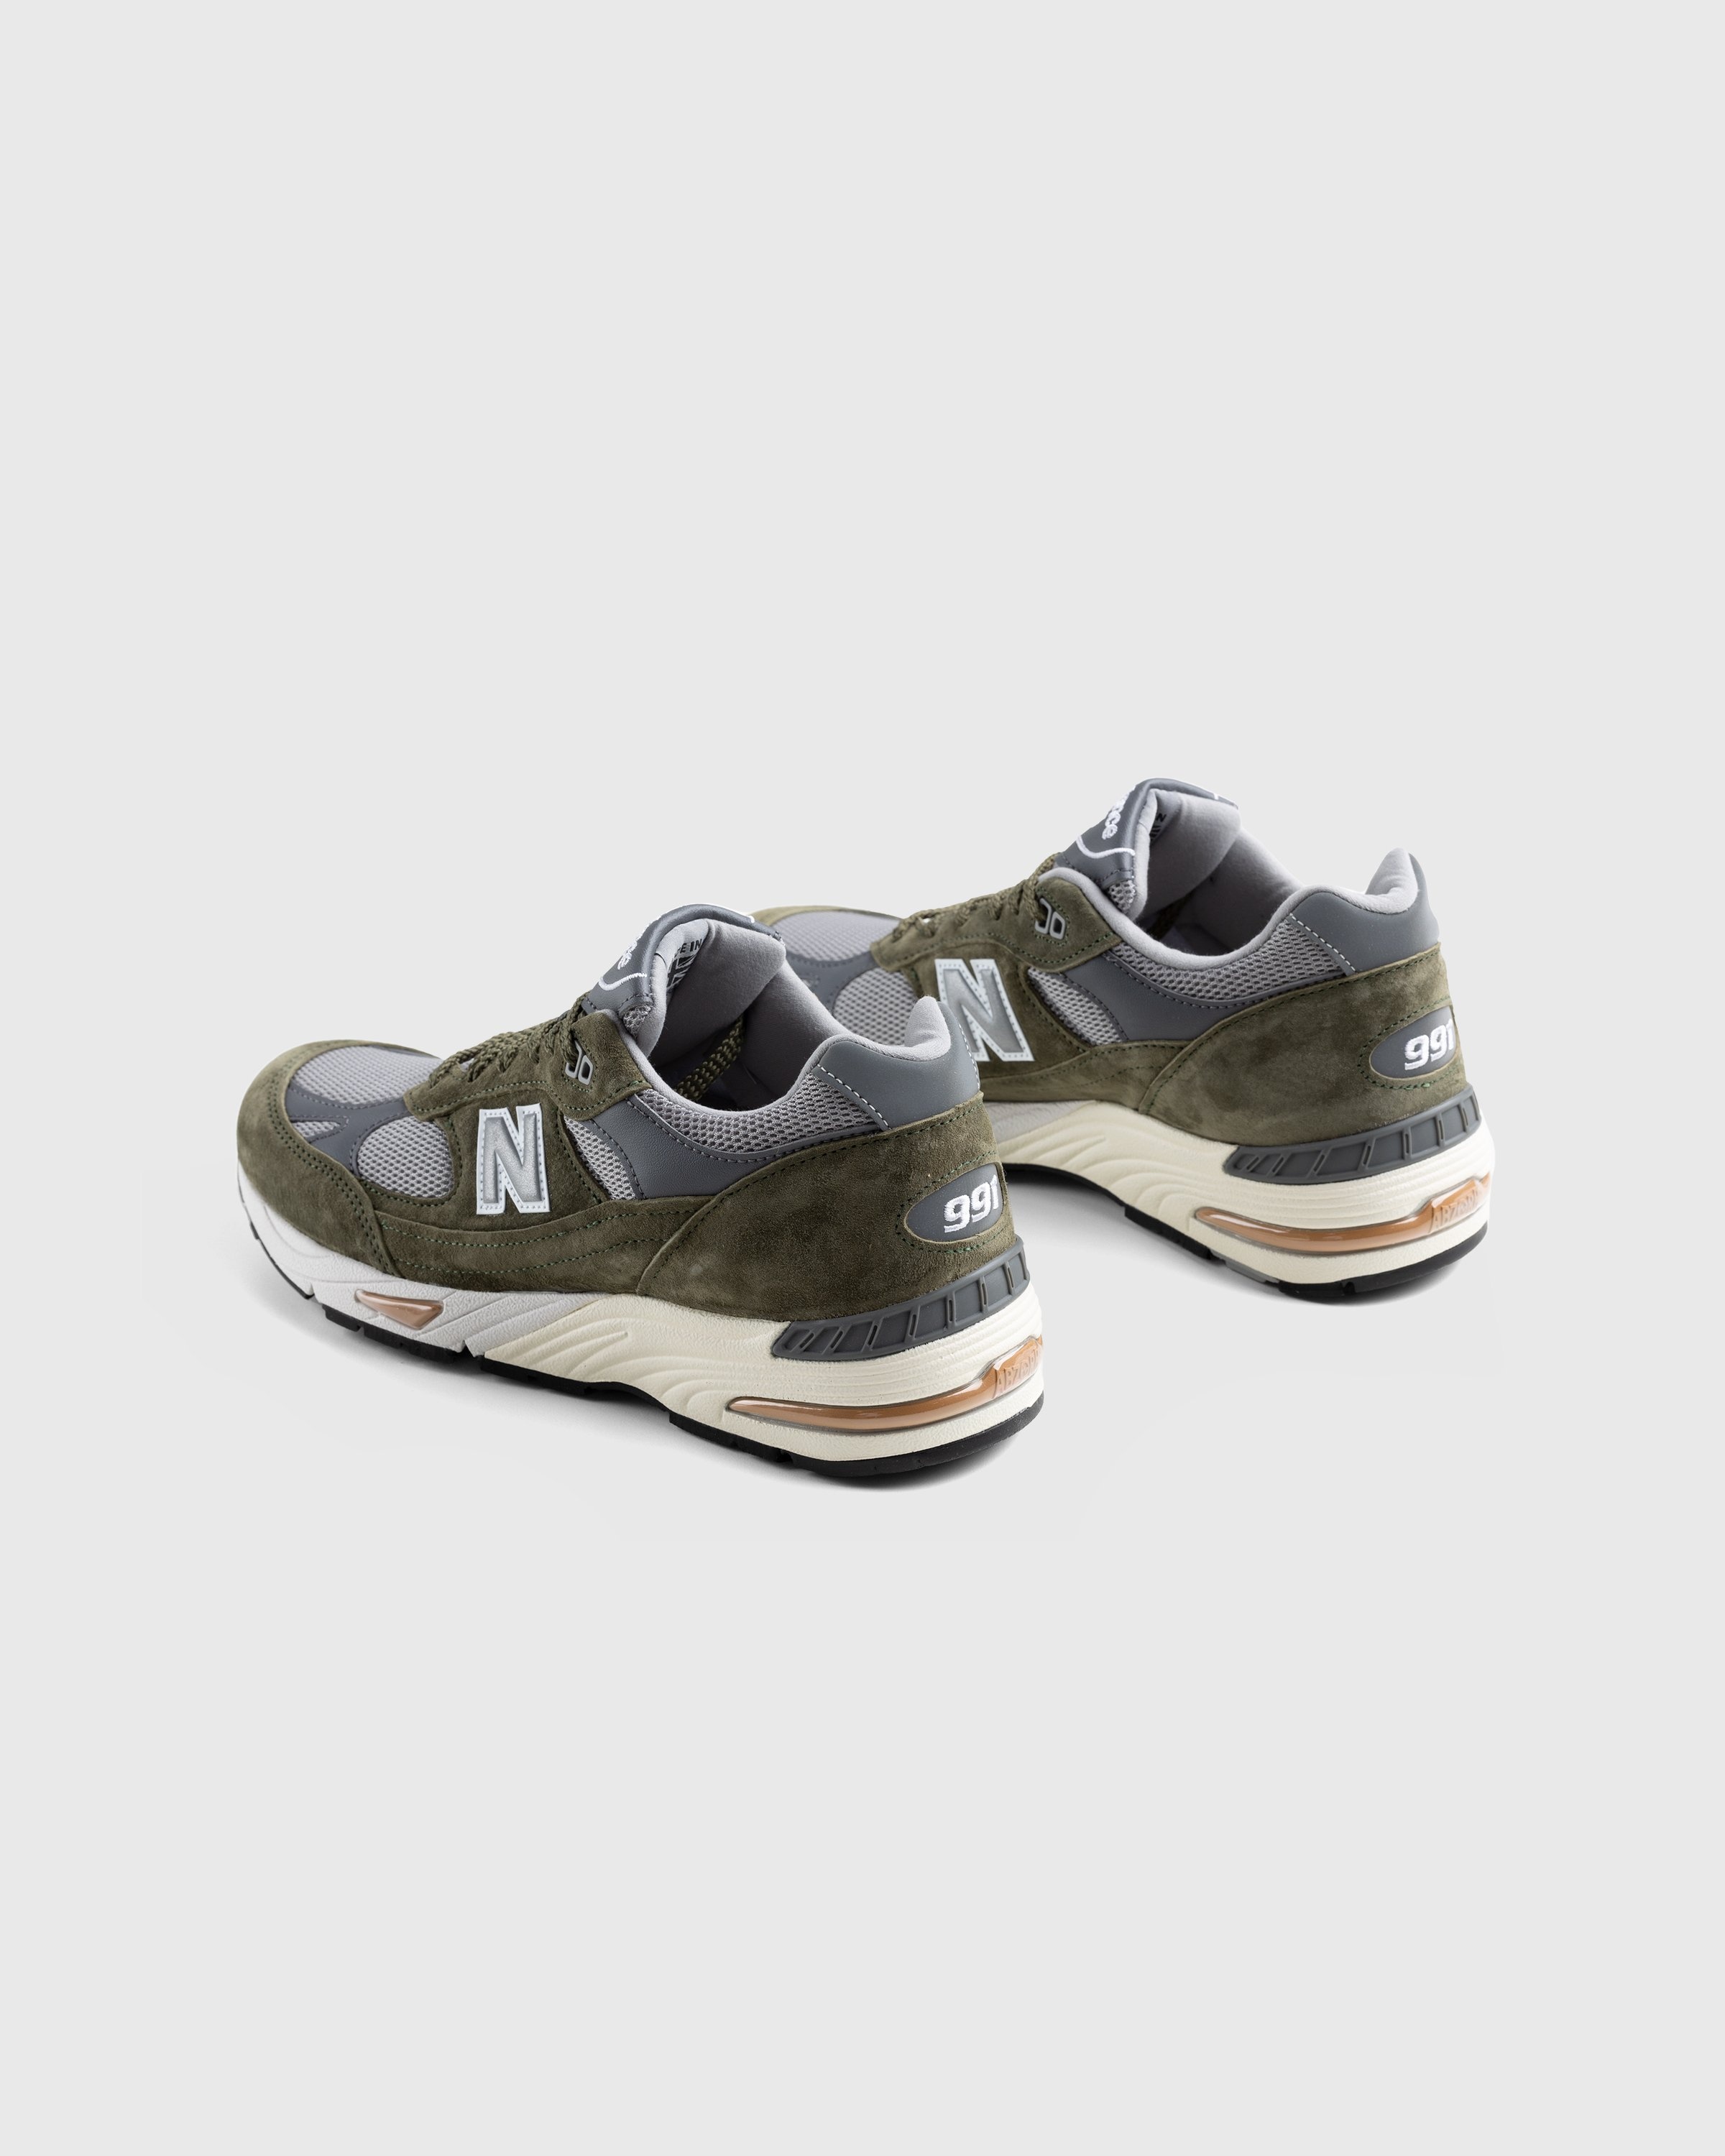 New Balance – M991GGT Green/Grey/Tan - Sneakers - Green - Image 4